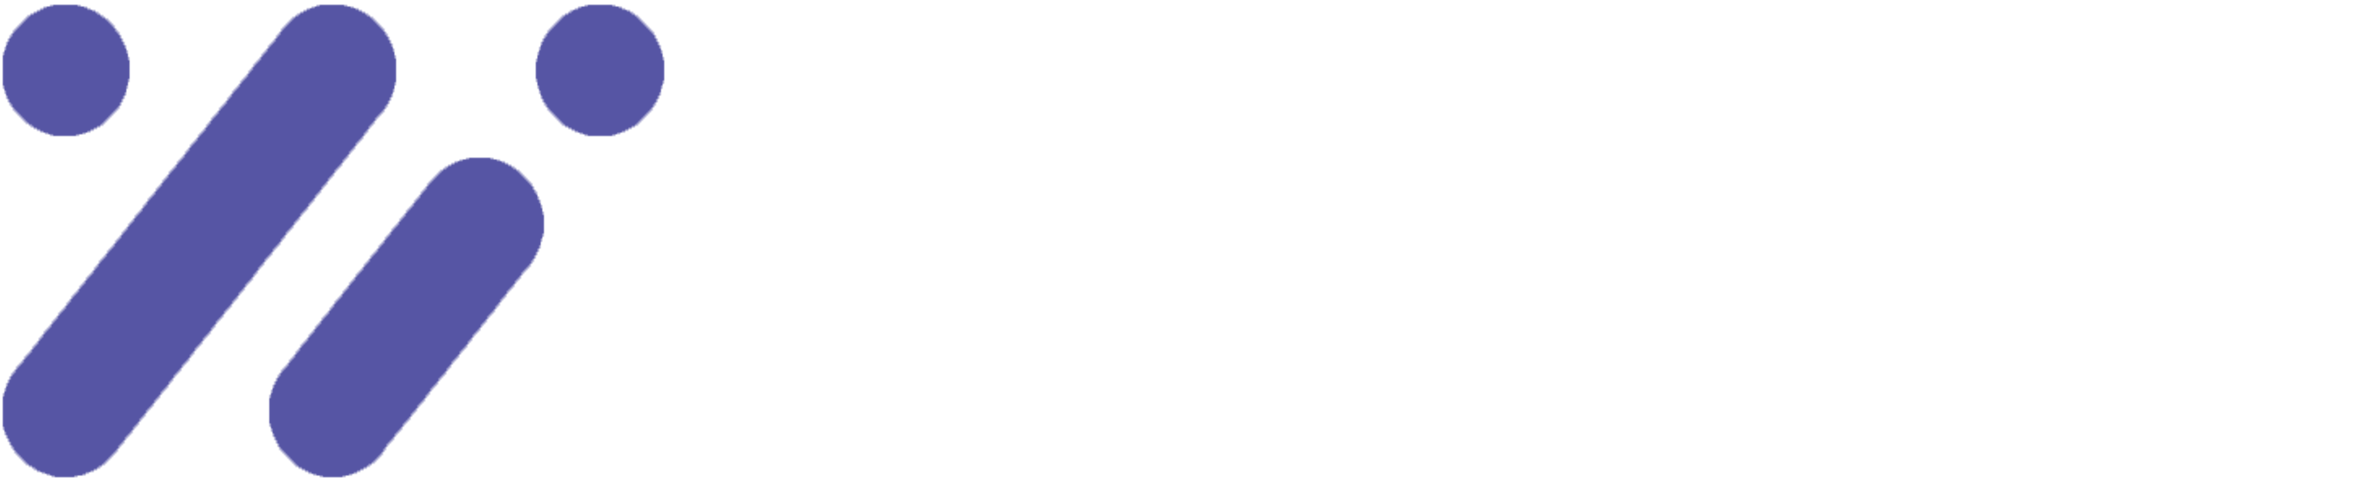 Bussin - Business Consulting Multi-Purpose Joomla Template